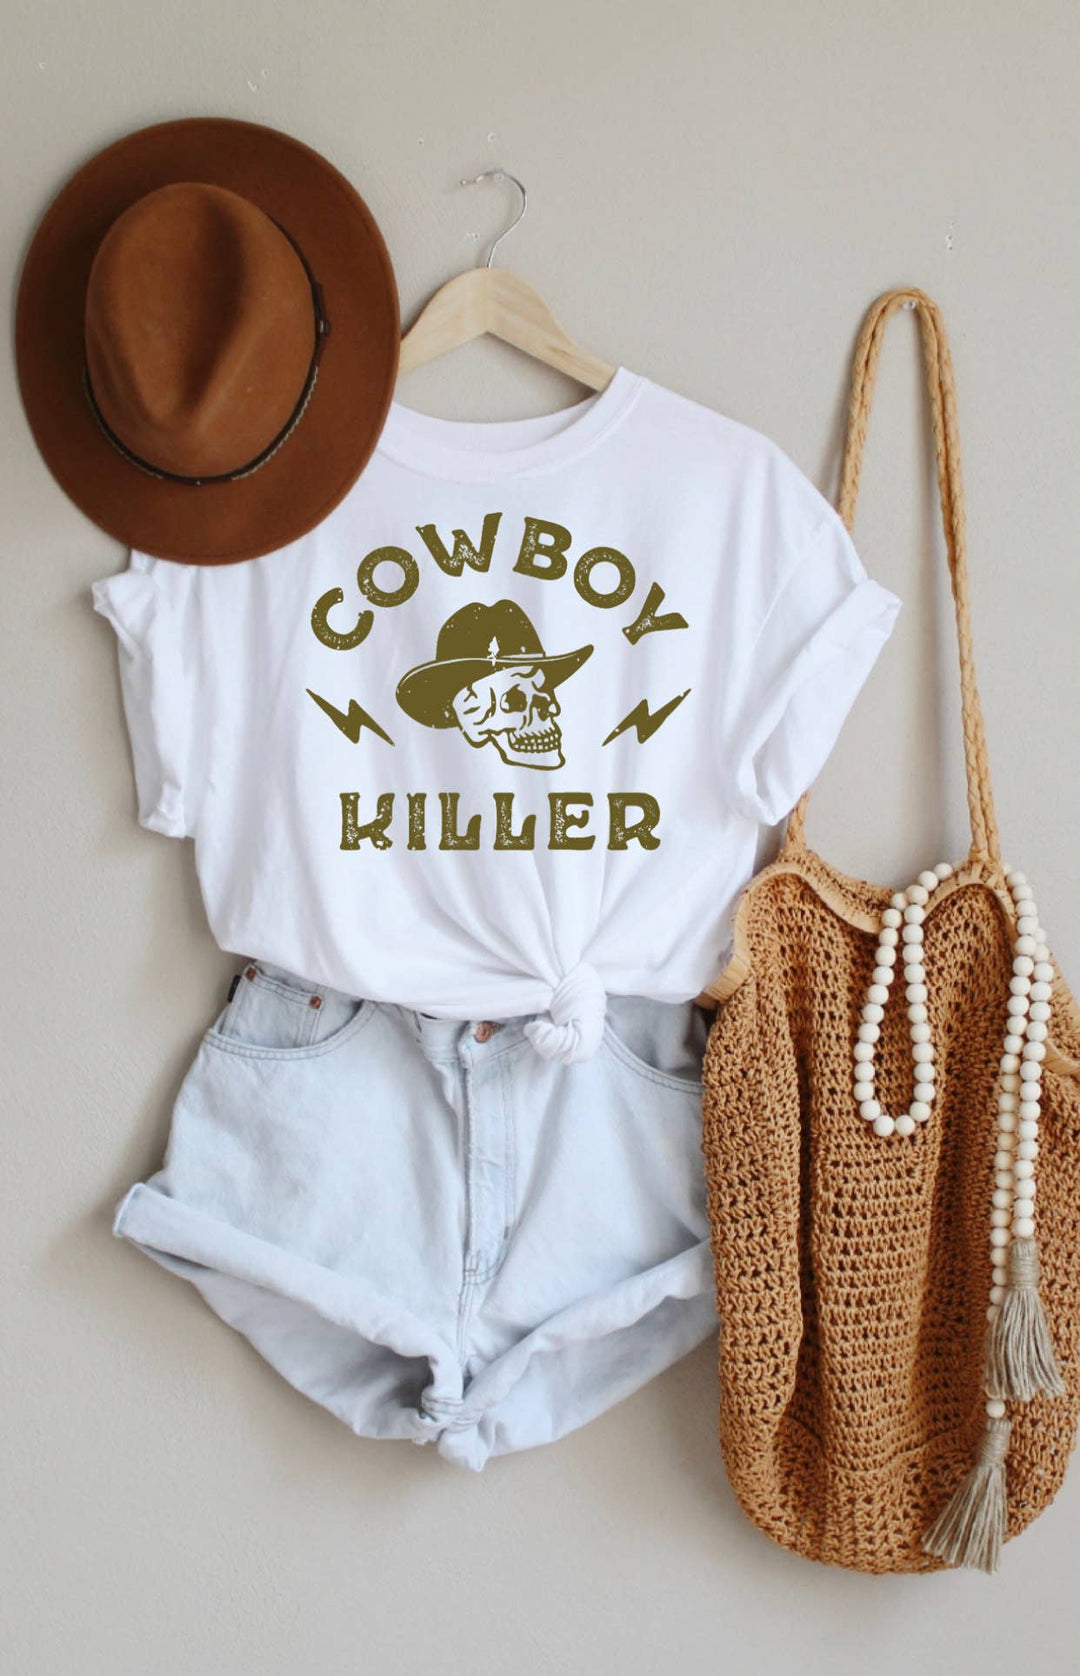 "Cowboy Killer" T-Shirt